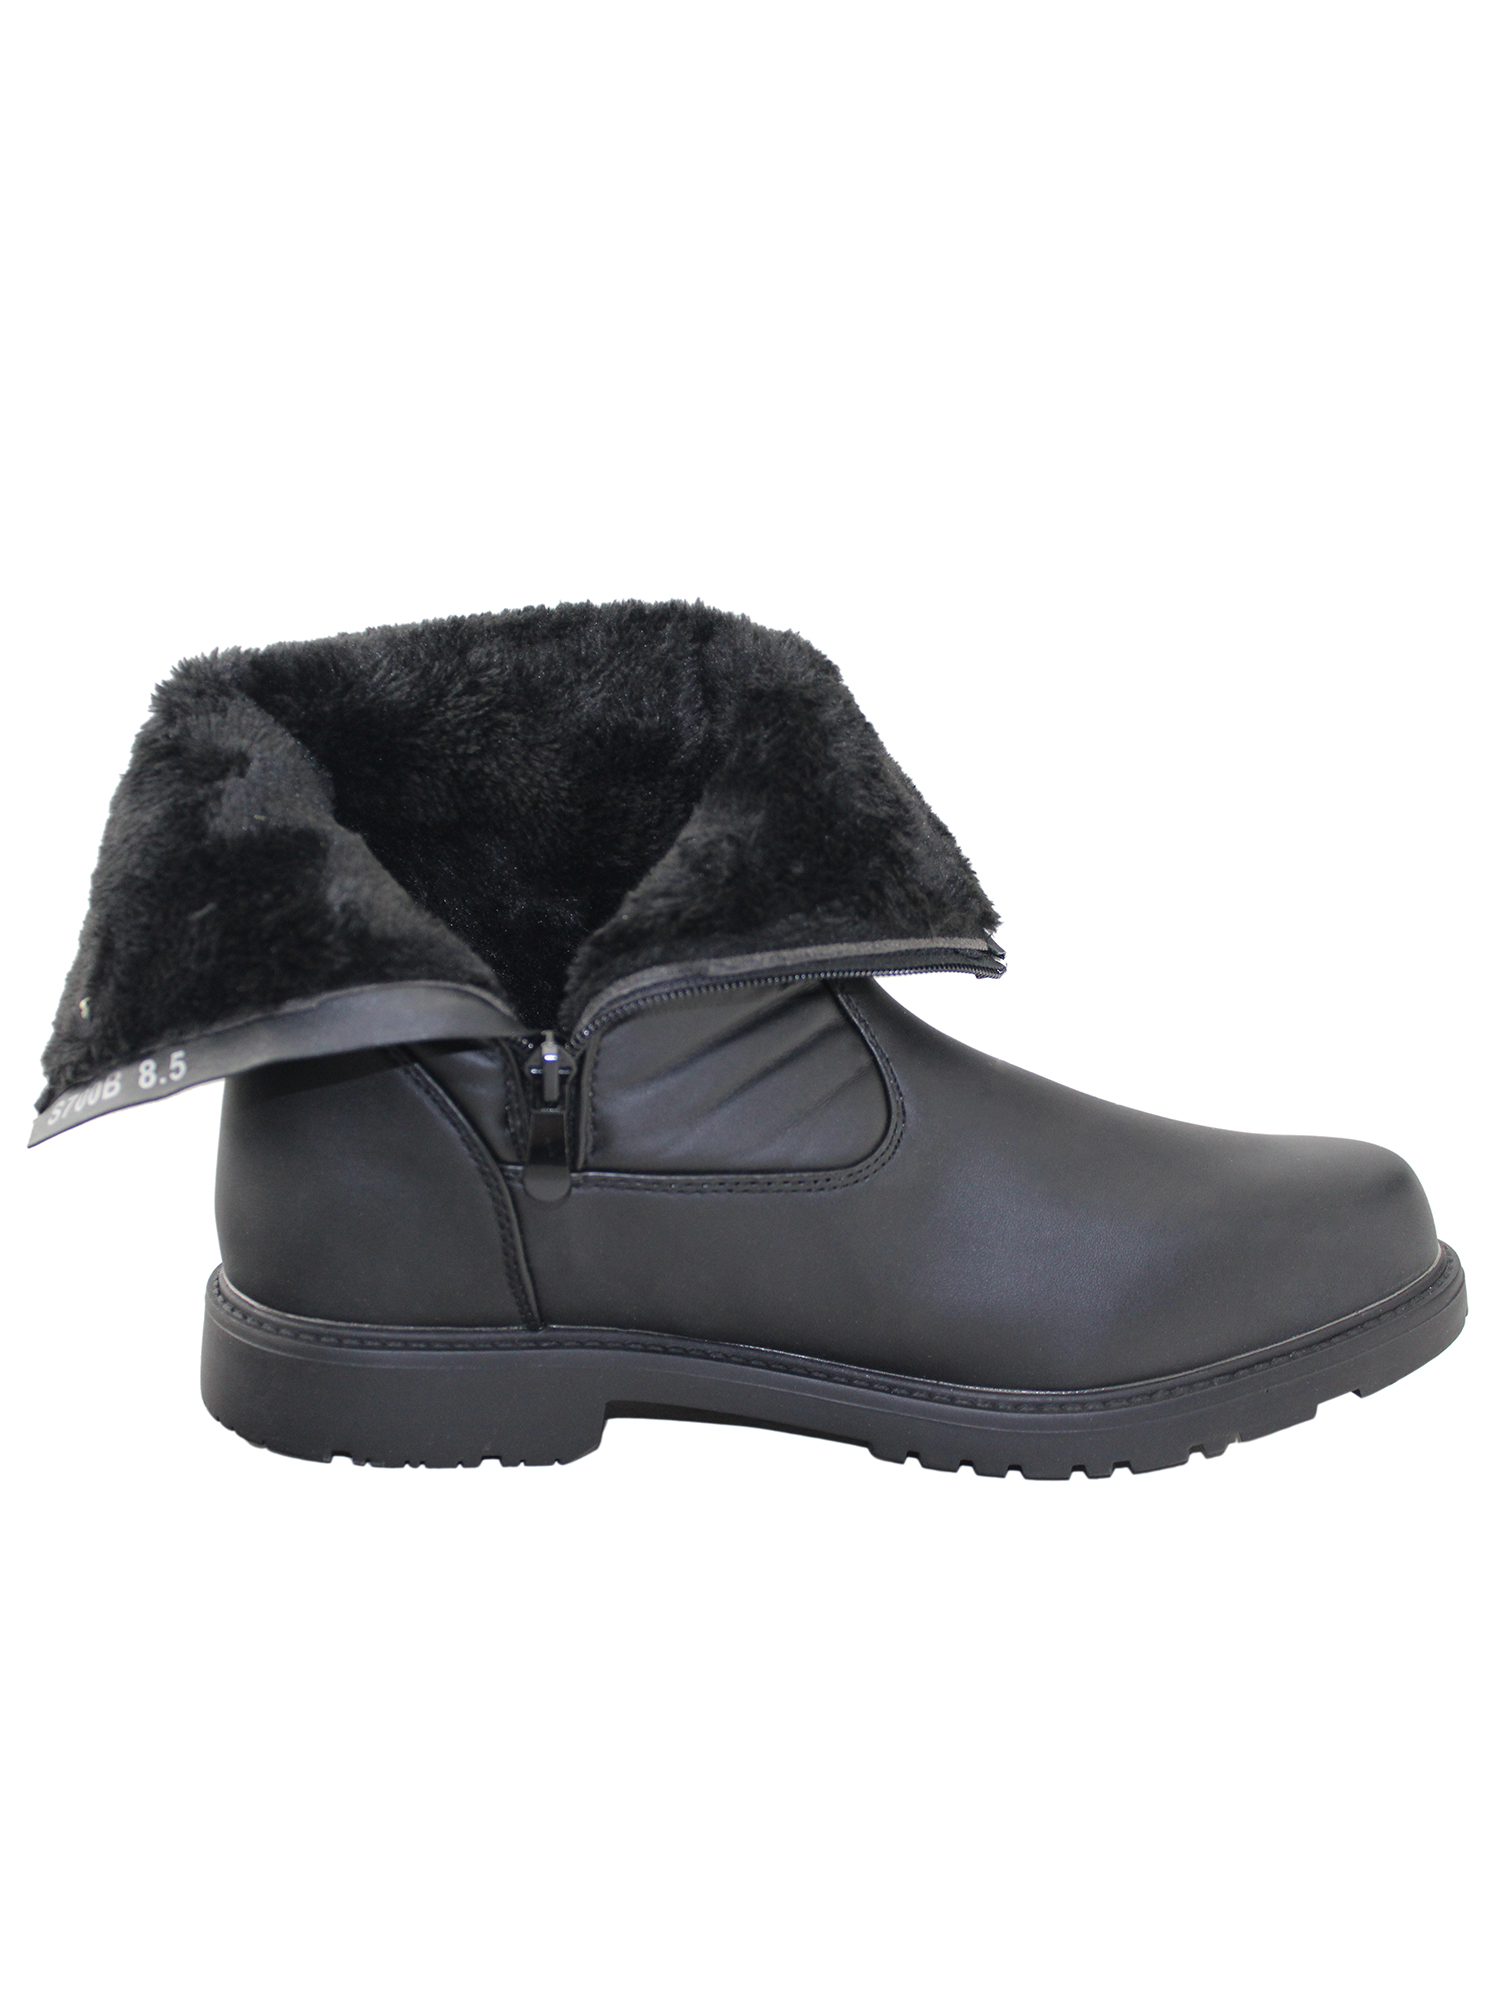 Tanleewa Men's Winter Boots Fur Lining Waterproof Non Slip Snow Boots Side Zipper Shoe Size 7 - image 2 of 6